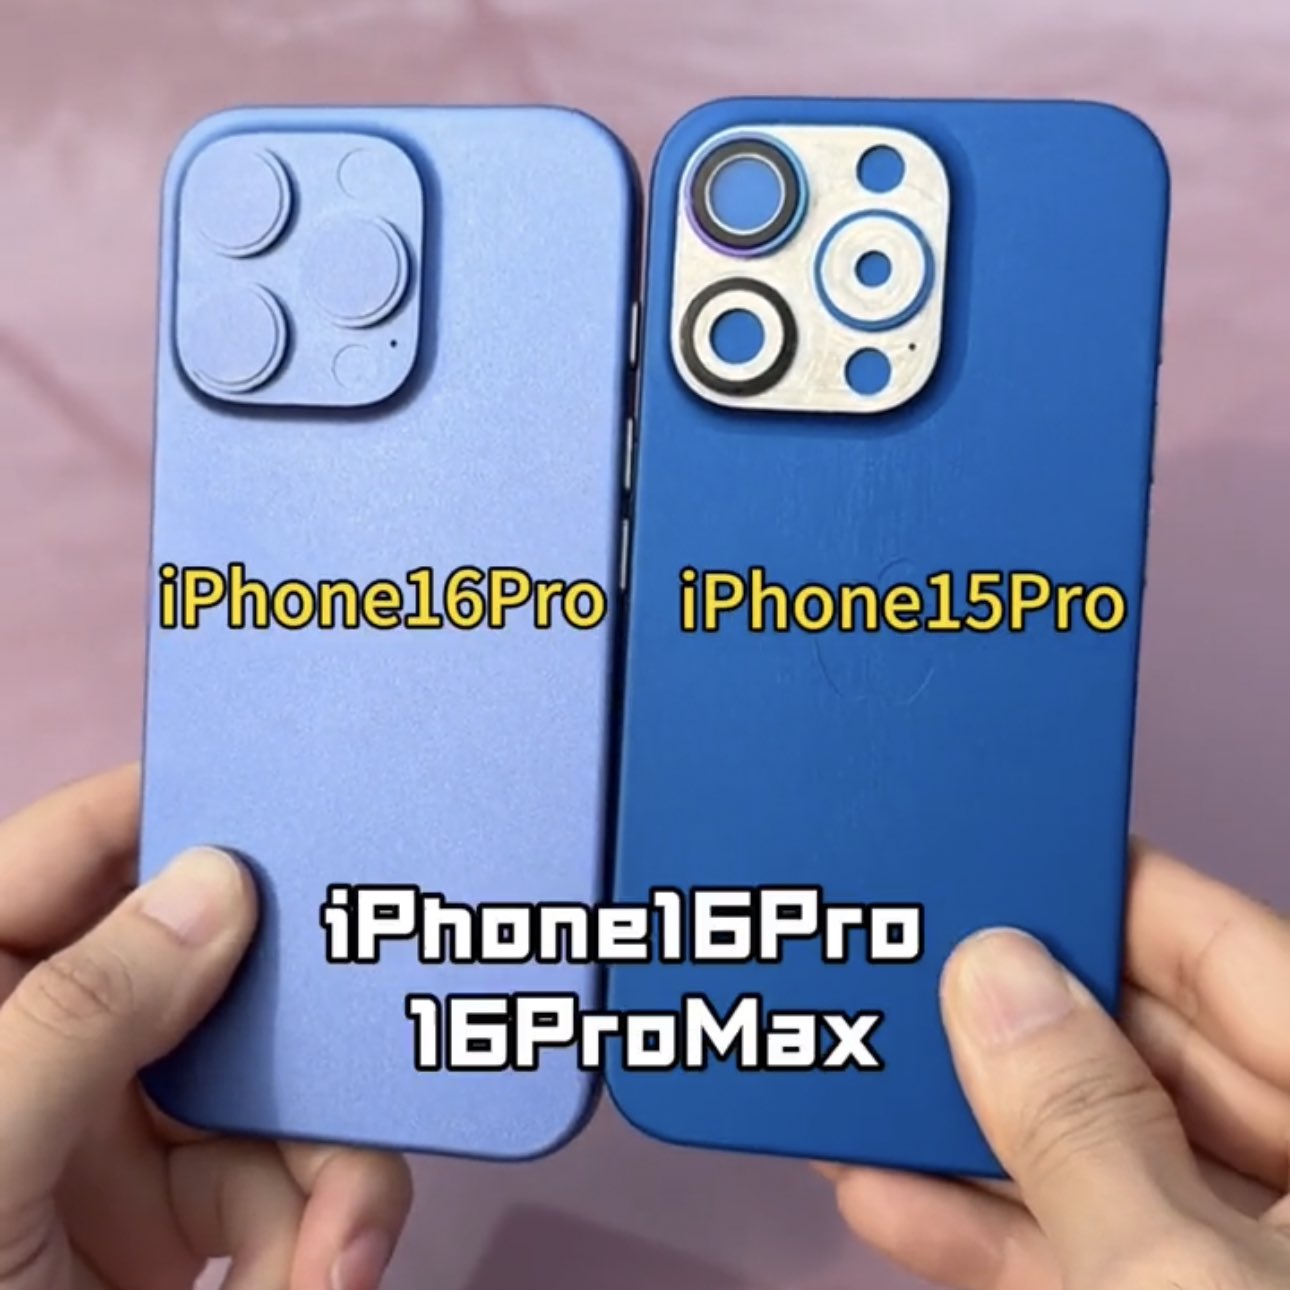 iphone 16 pro v iphone 15 pro